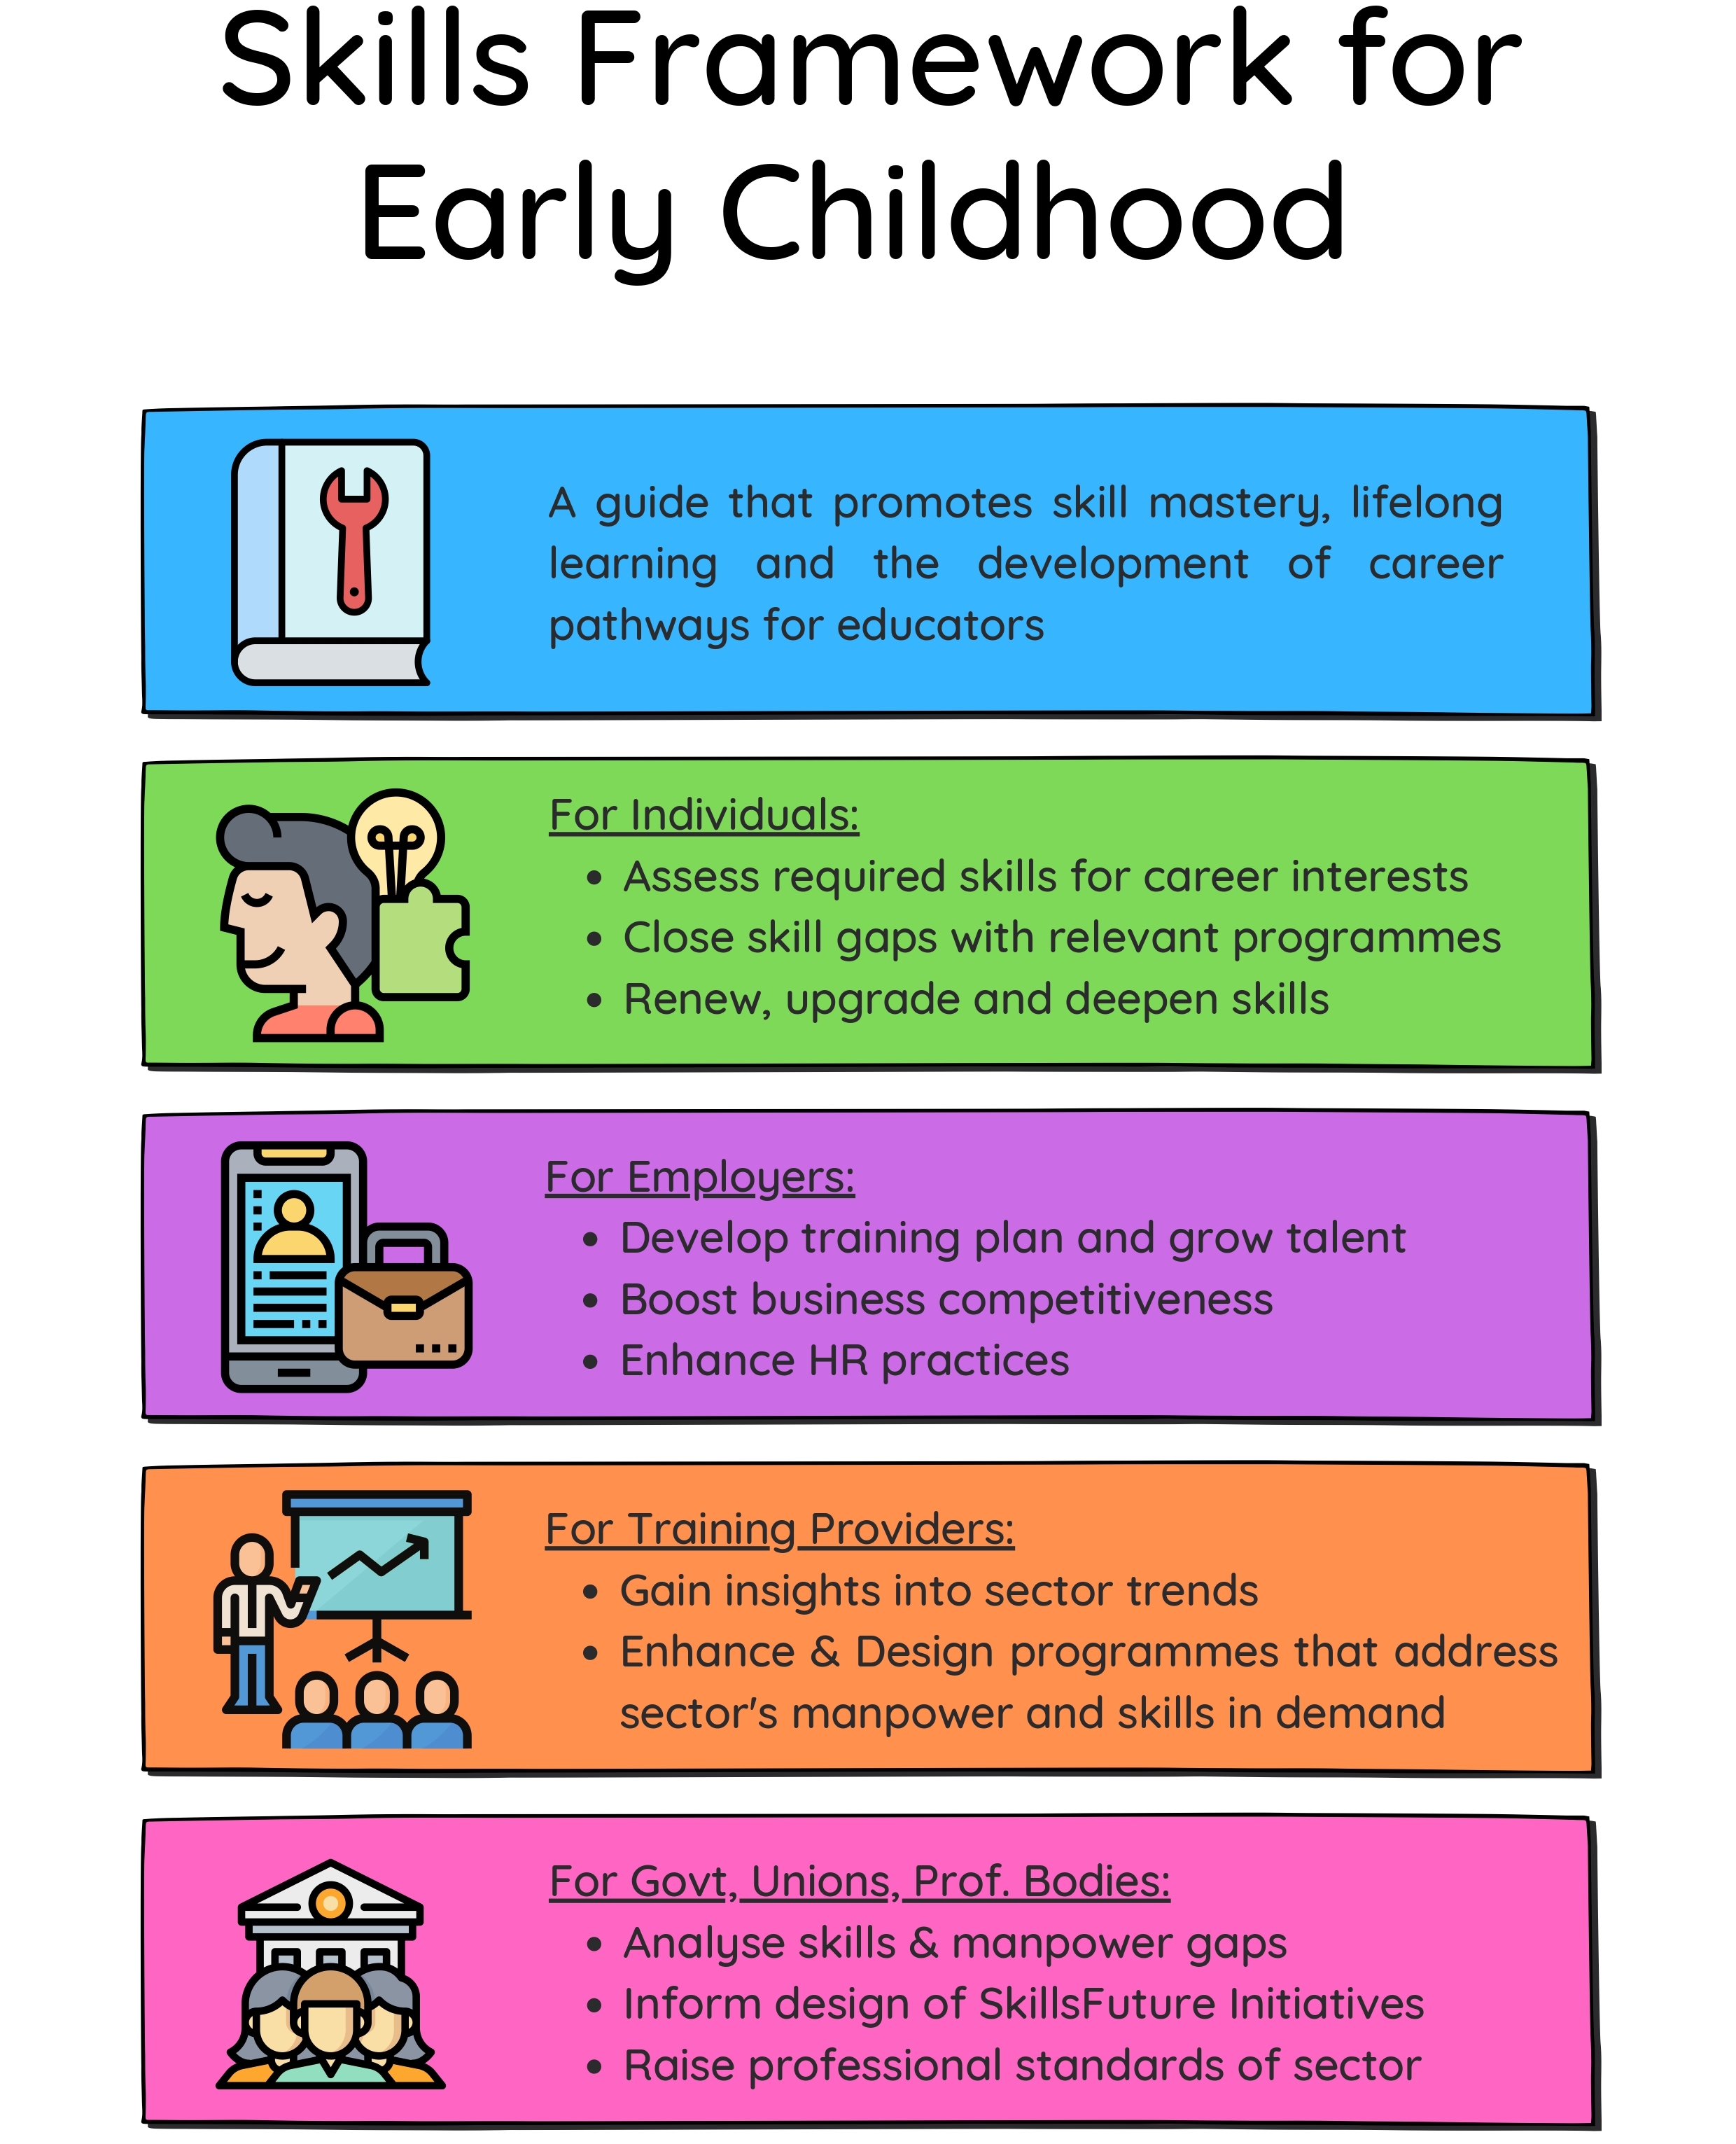 Skills Framework for Early Childhood